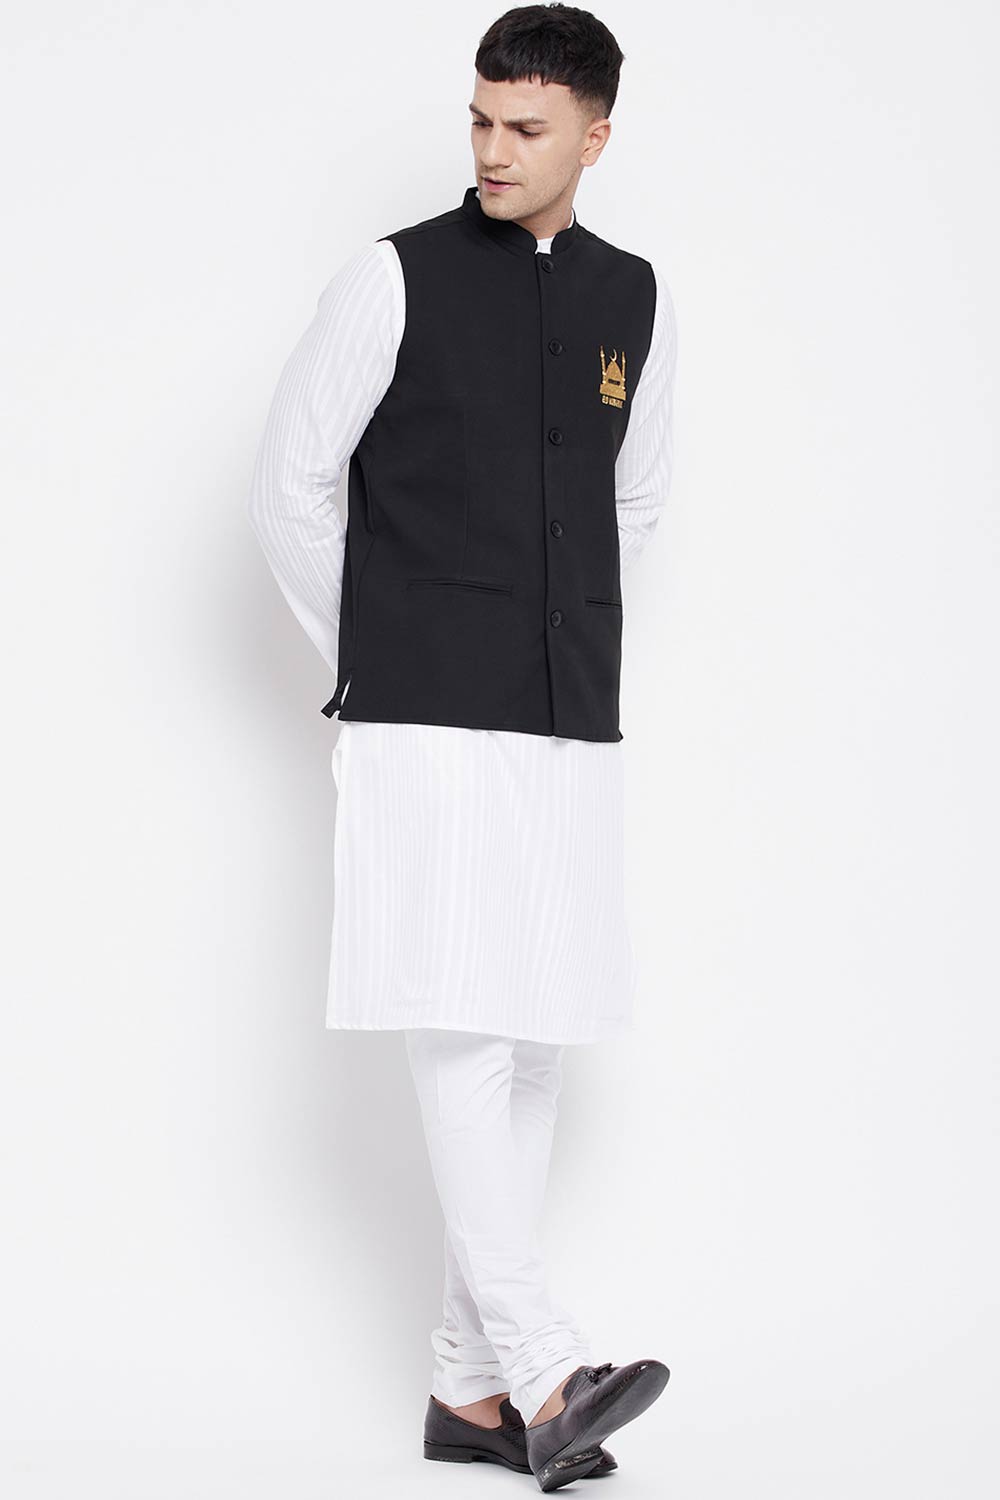 Buy Men's Merino Eid Mubarak Embroidery Nehru Jacket in Black - Side